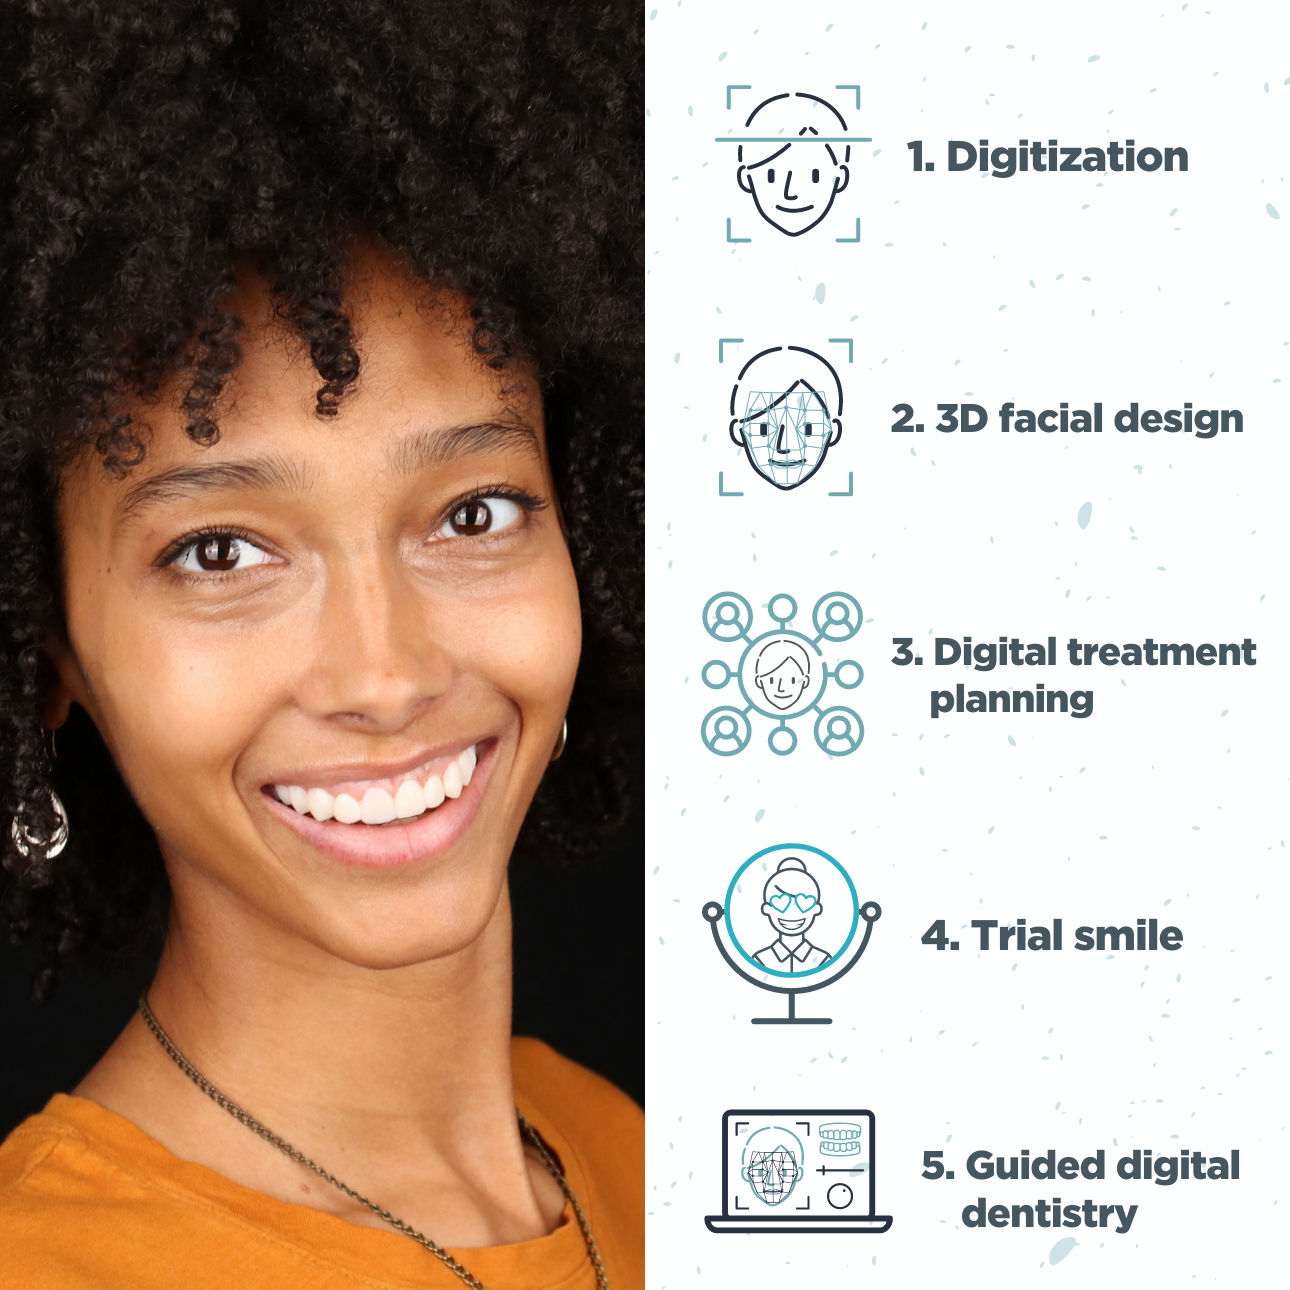 5. Guided digital dentistry